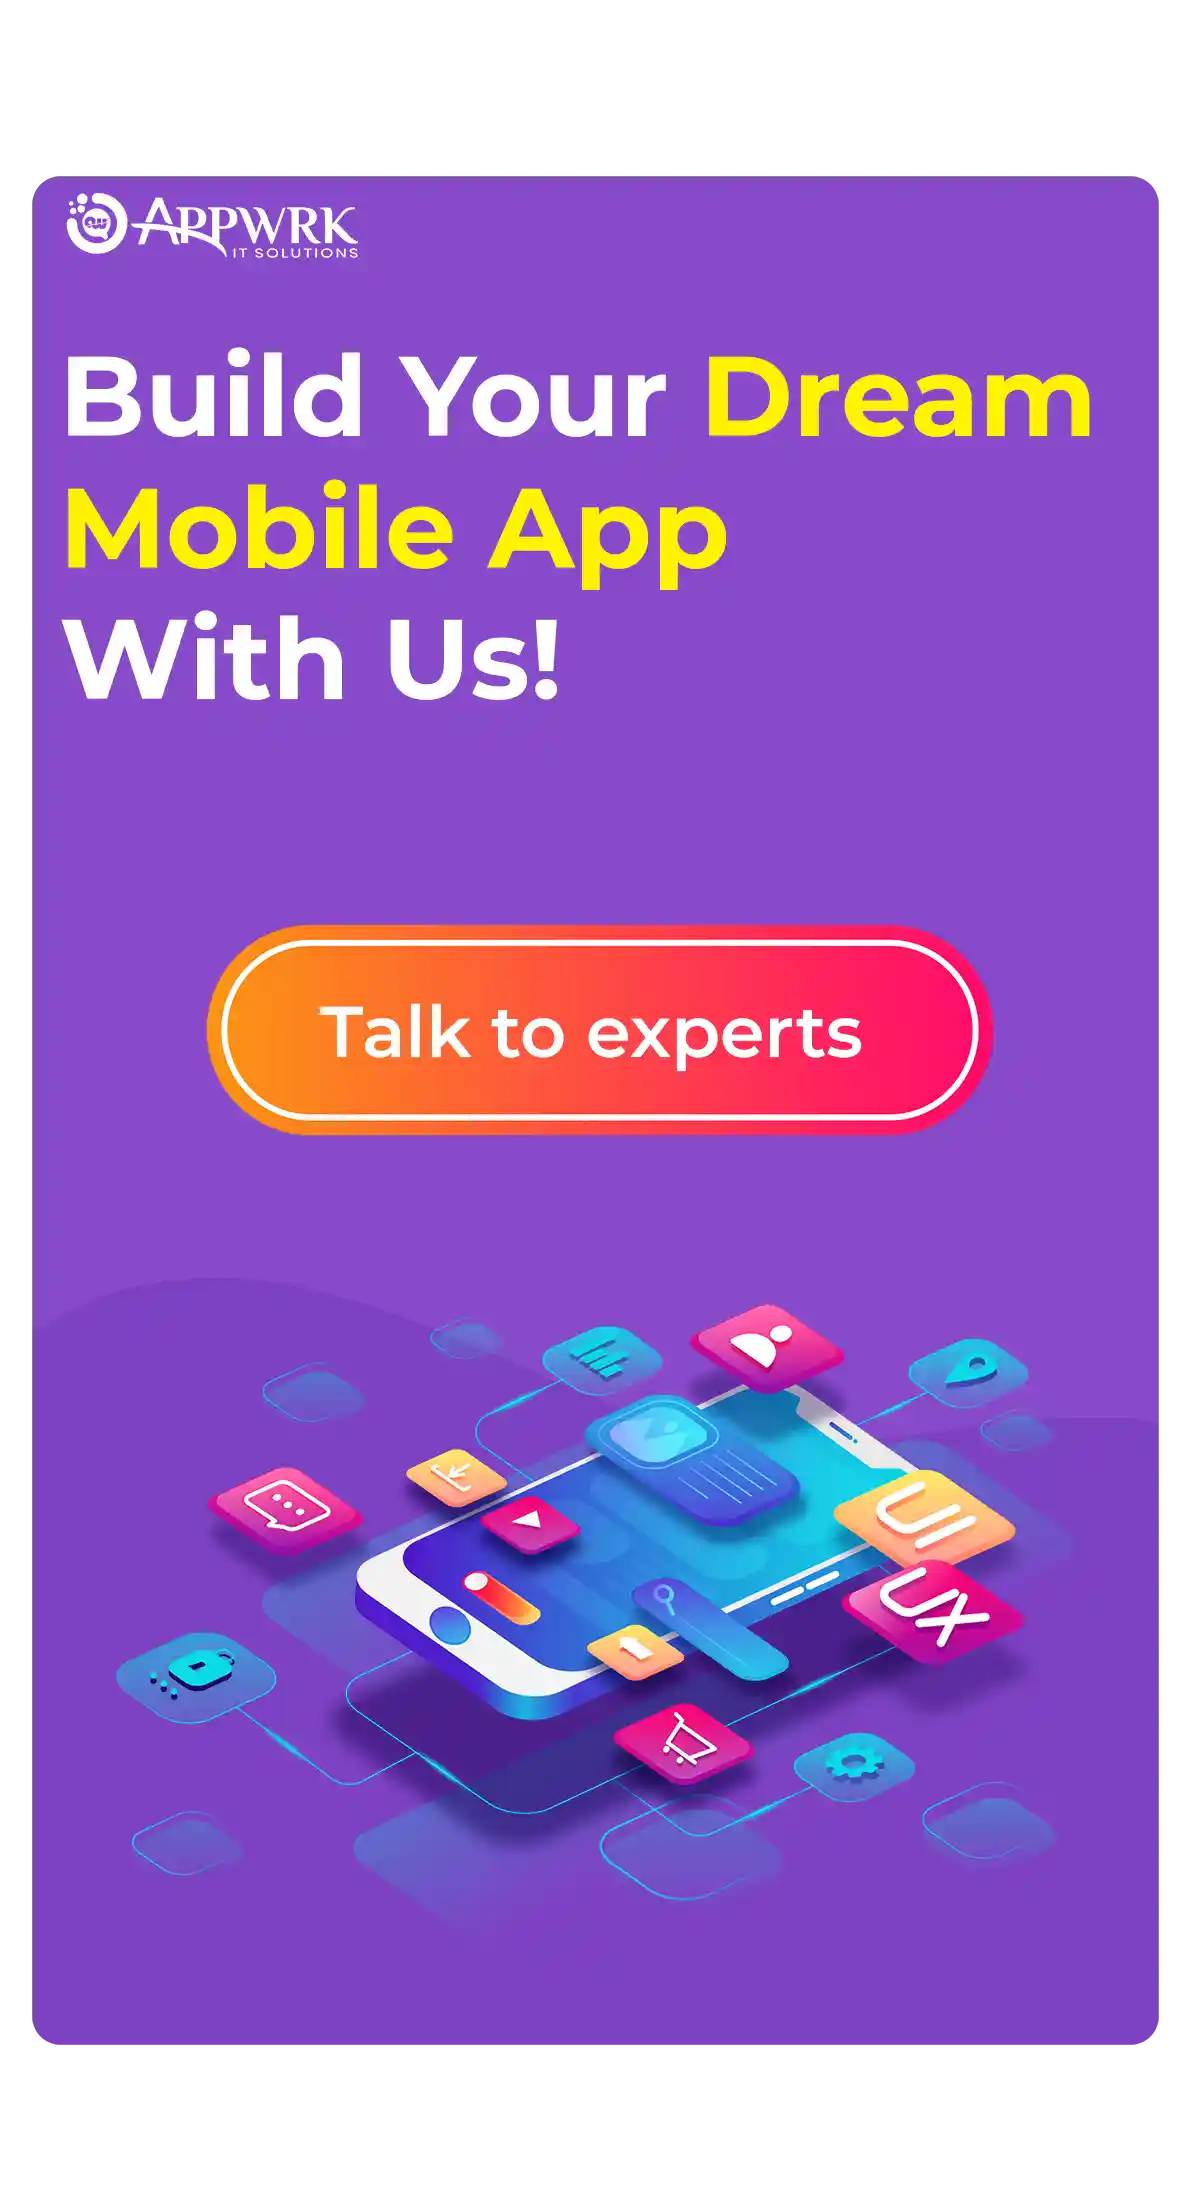 Build Your Dream Mobile App - APPWRK